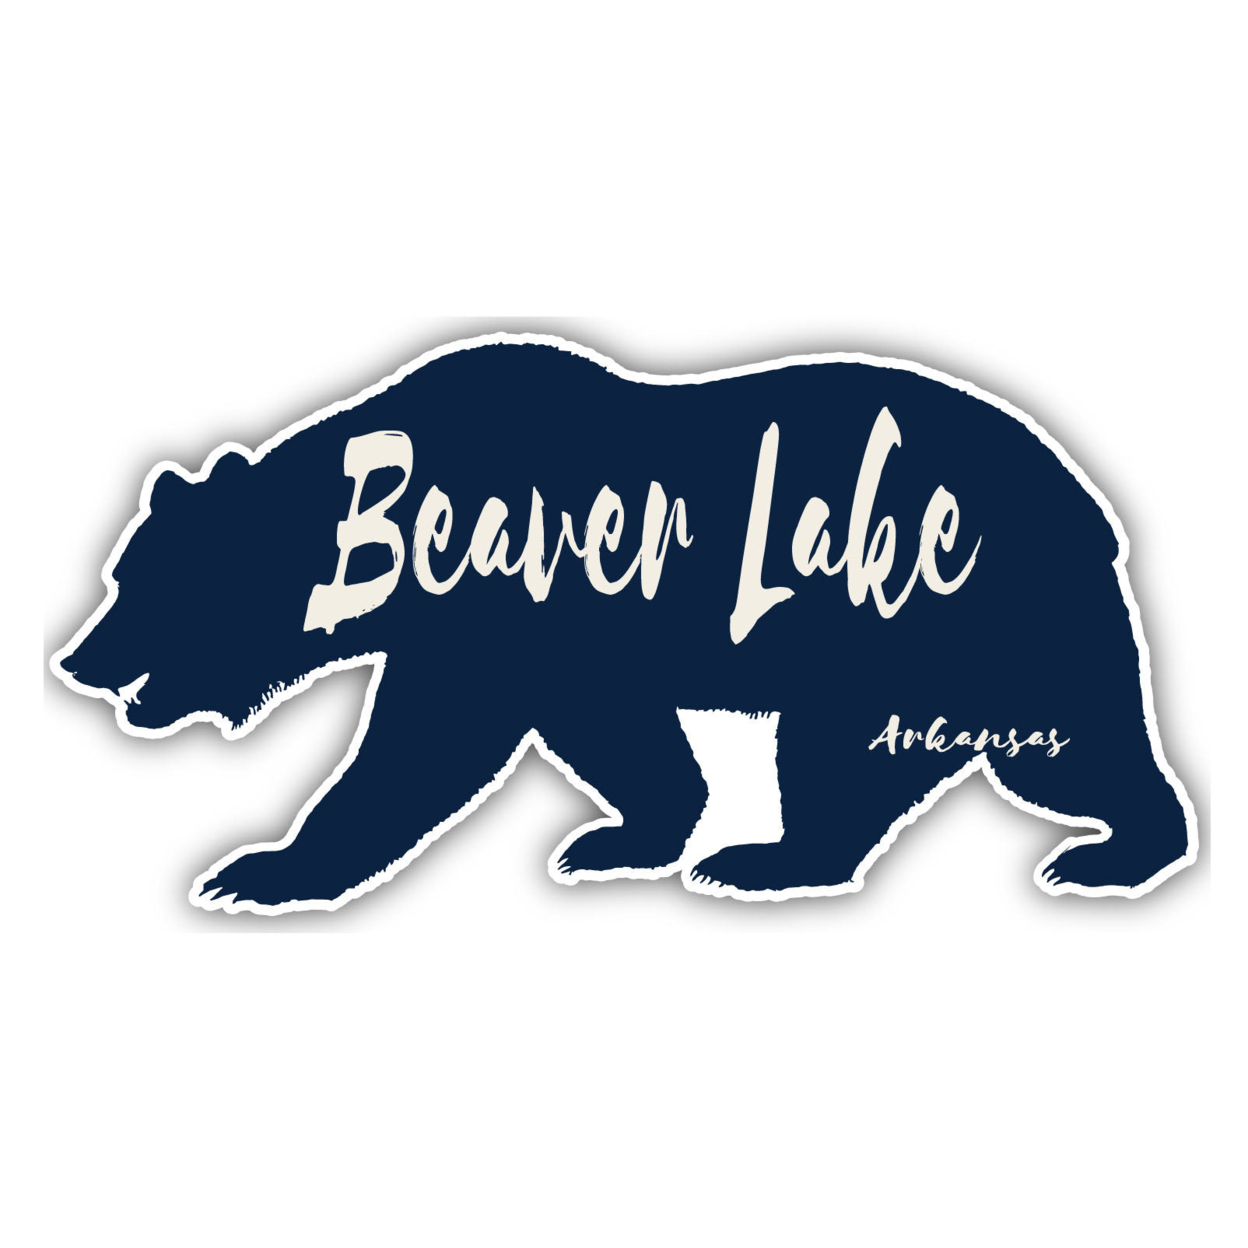 Beaver Lake Arkansas Souvenir Decorative Stickers (Choose Theme And Size) - 4-Pack, 2-Inch, Adventures Awaits